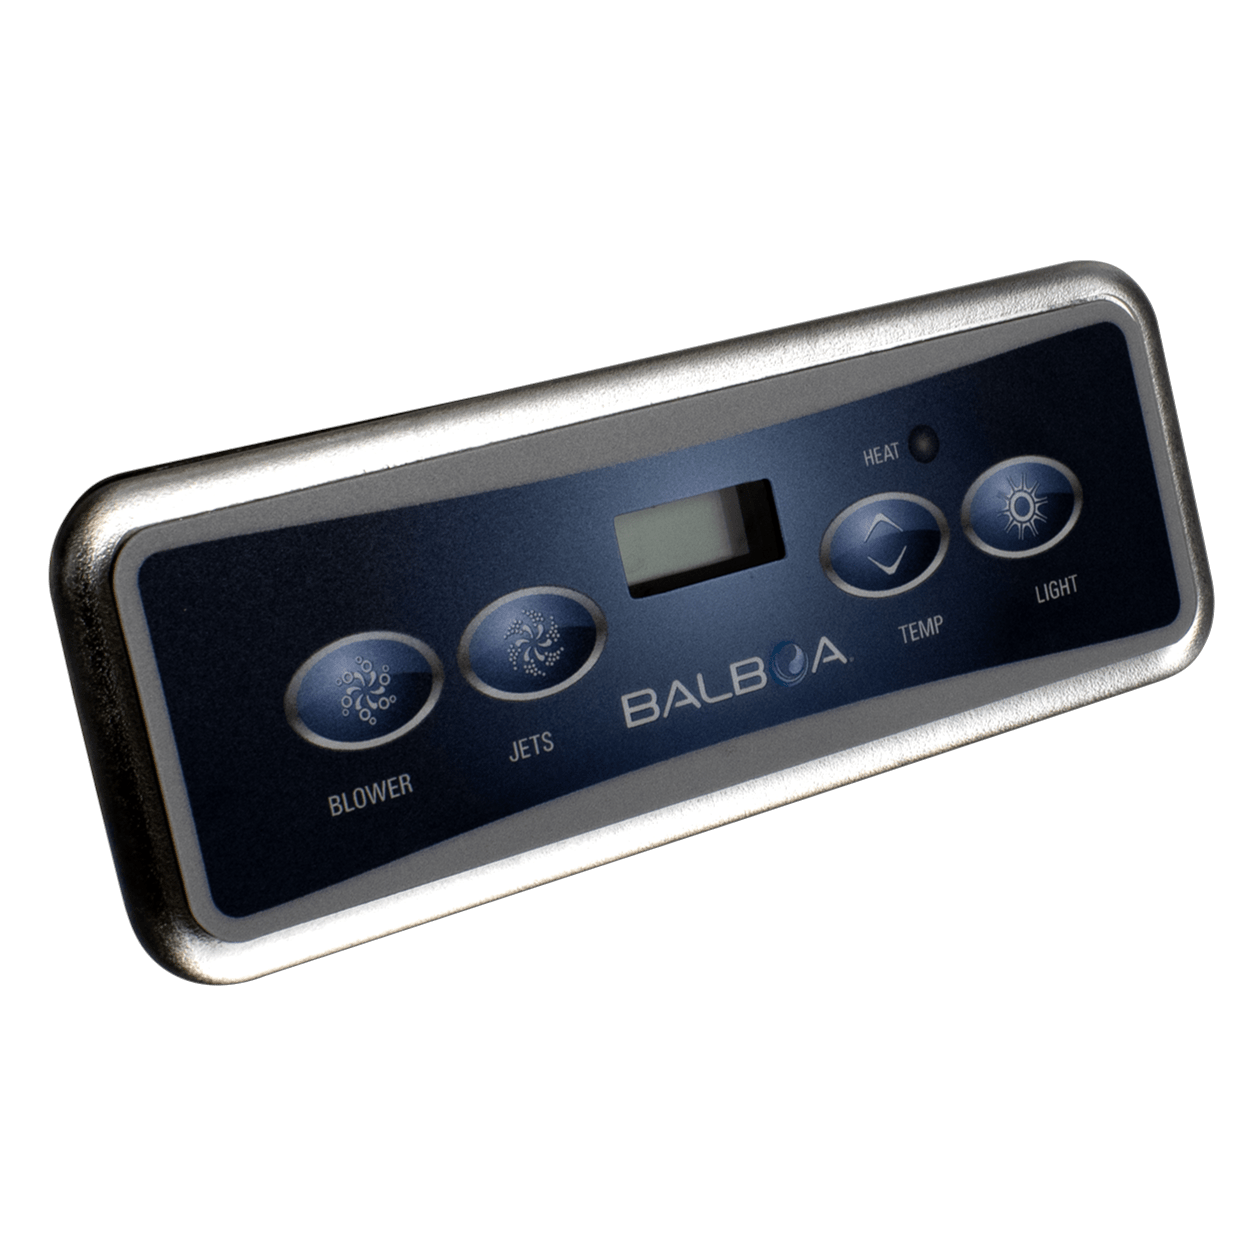 Balboa VL401 LCD Light Duplex Jets 4-button Panel